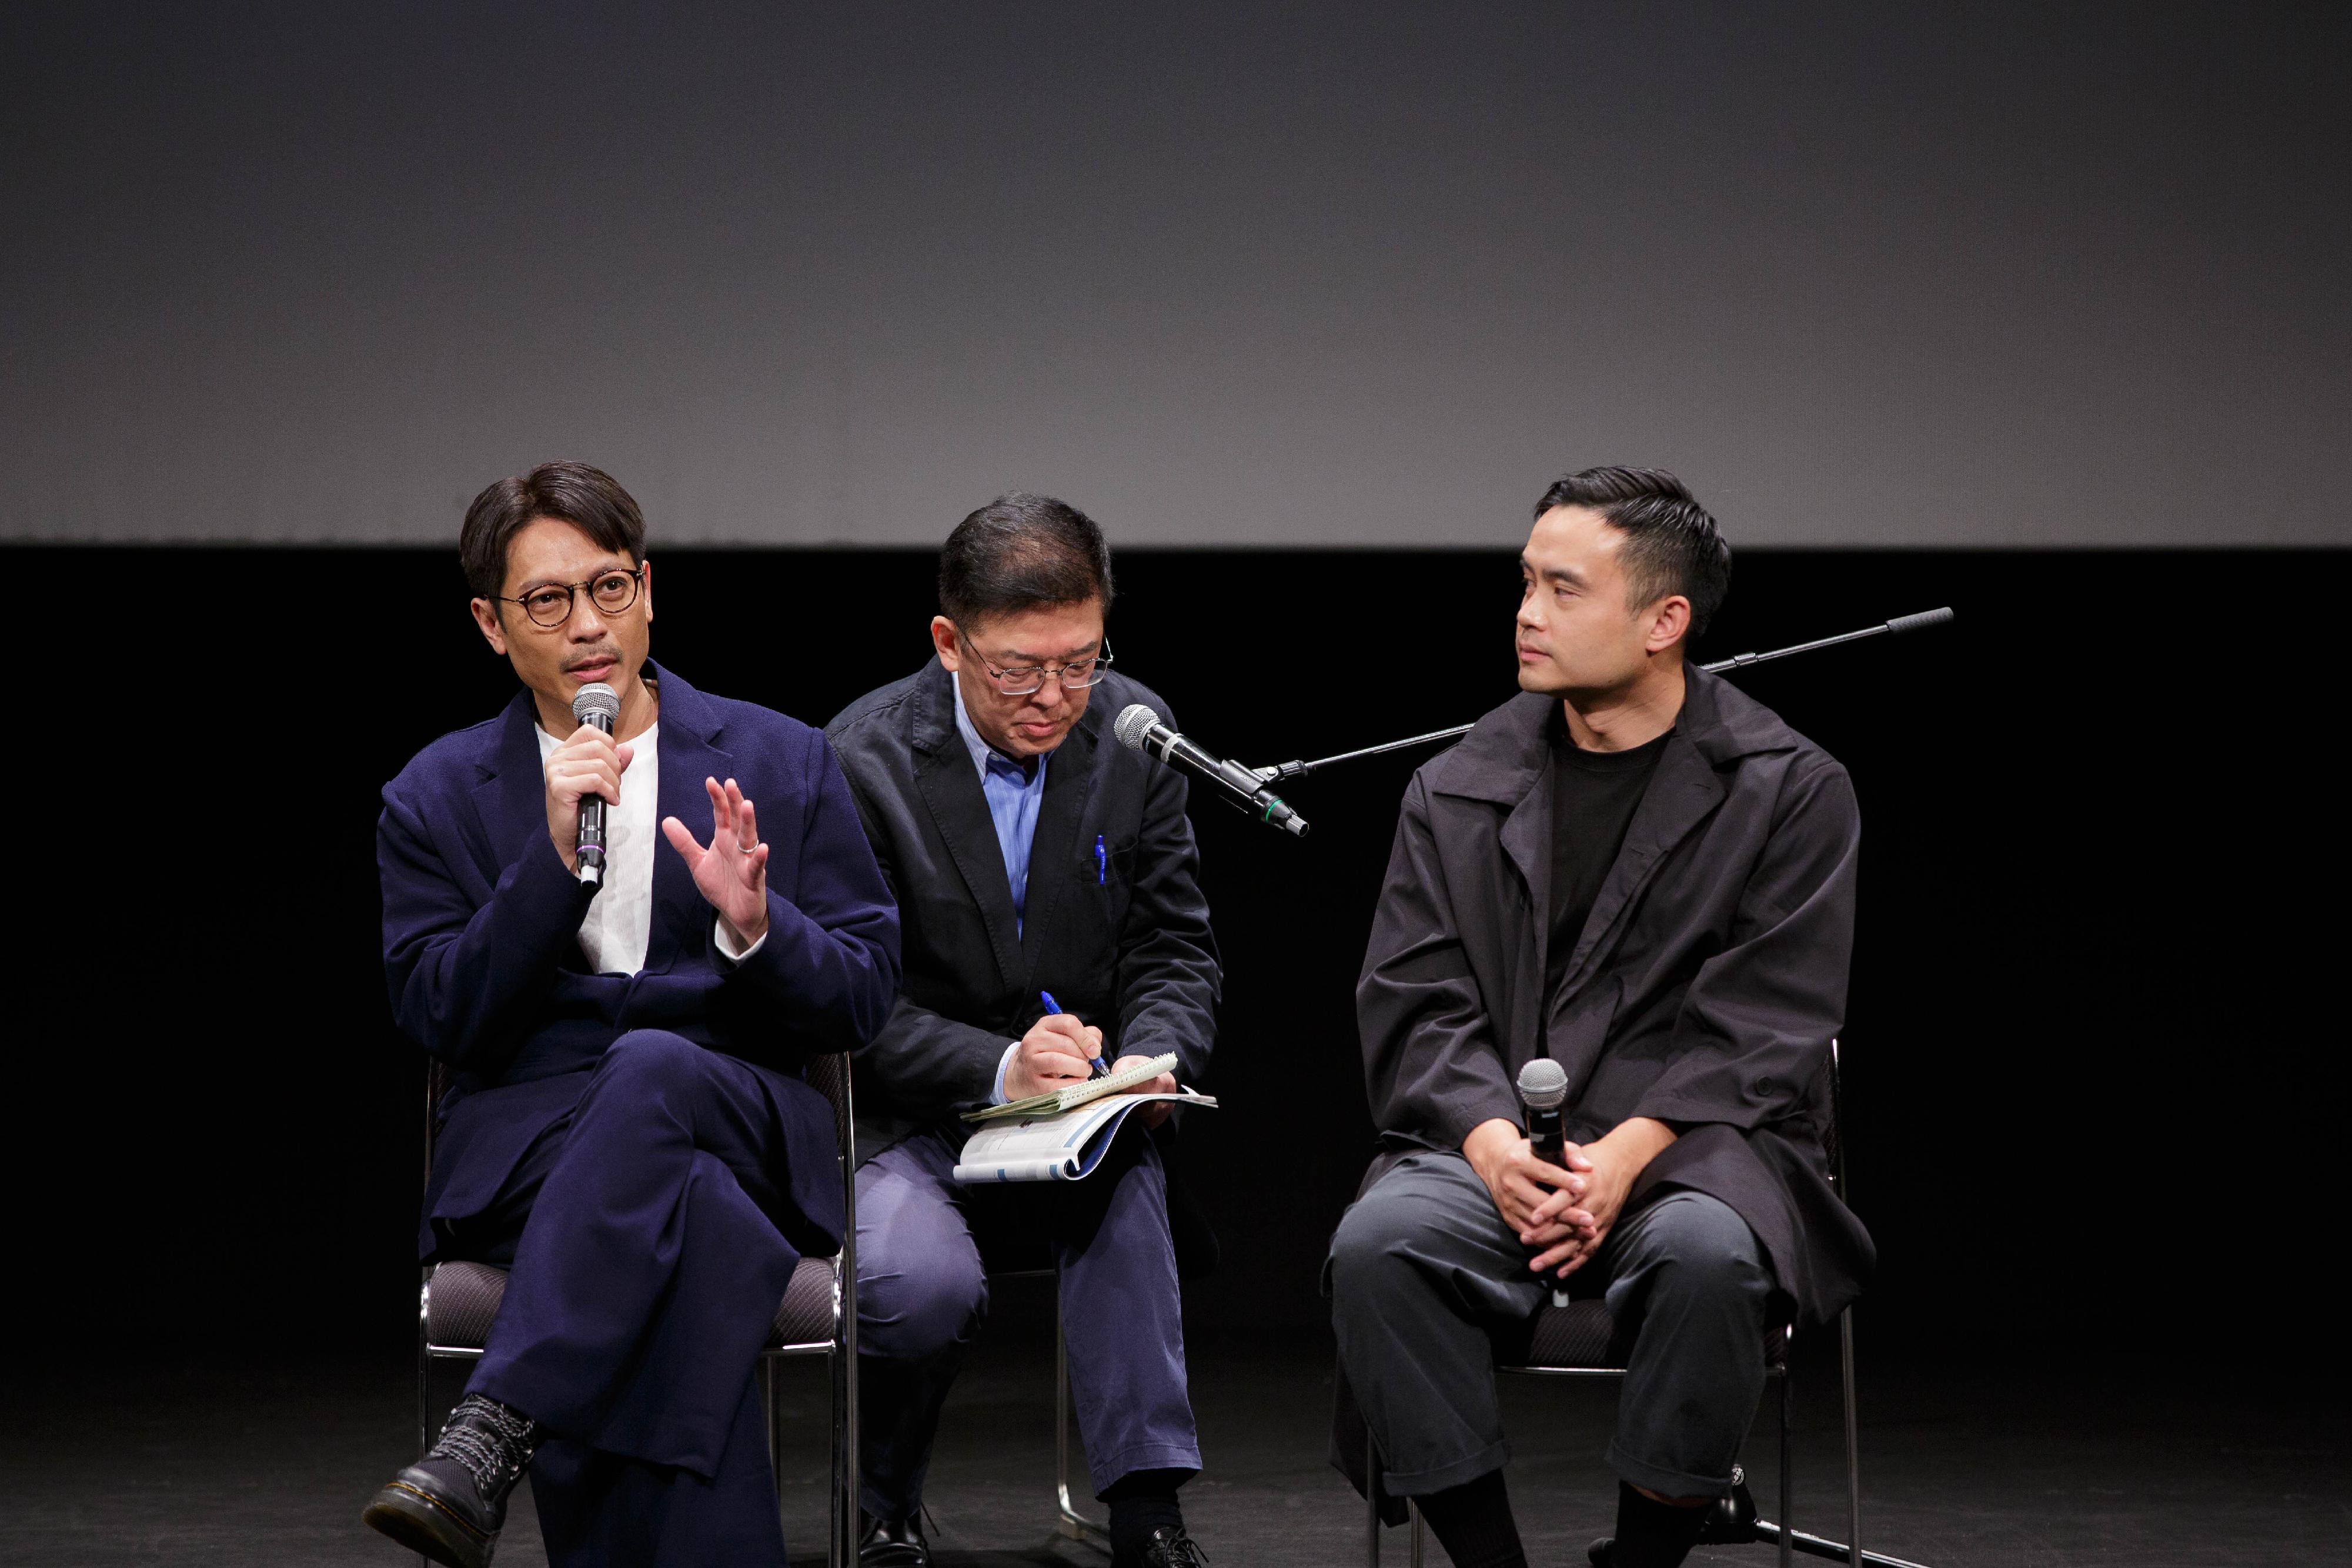 「Hong Kong Gala Screening」電影放映會今晚（三月十六日）在日本大阪舉行，放映香港電影《流水落花》。圖示《流水落花》導演賈勝楓（右）和演員陸駿光（左）在電影放映後參加分享會與觀眾交流。